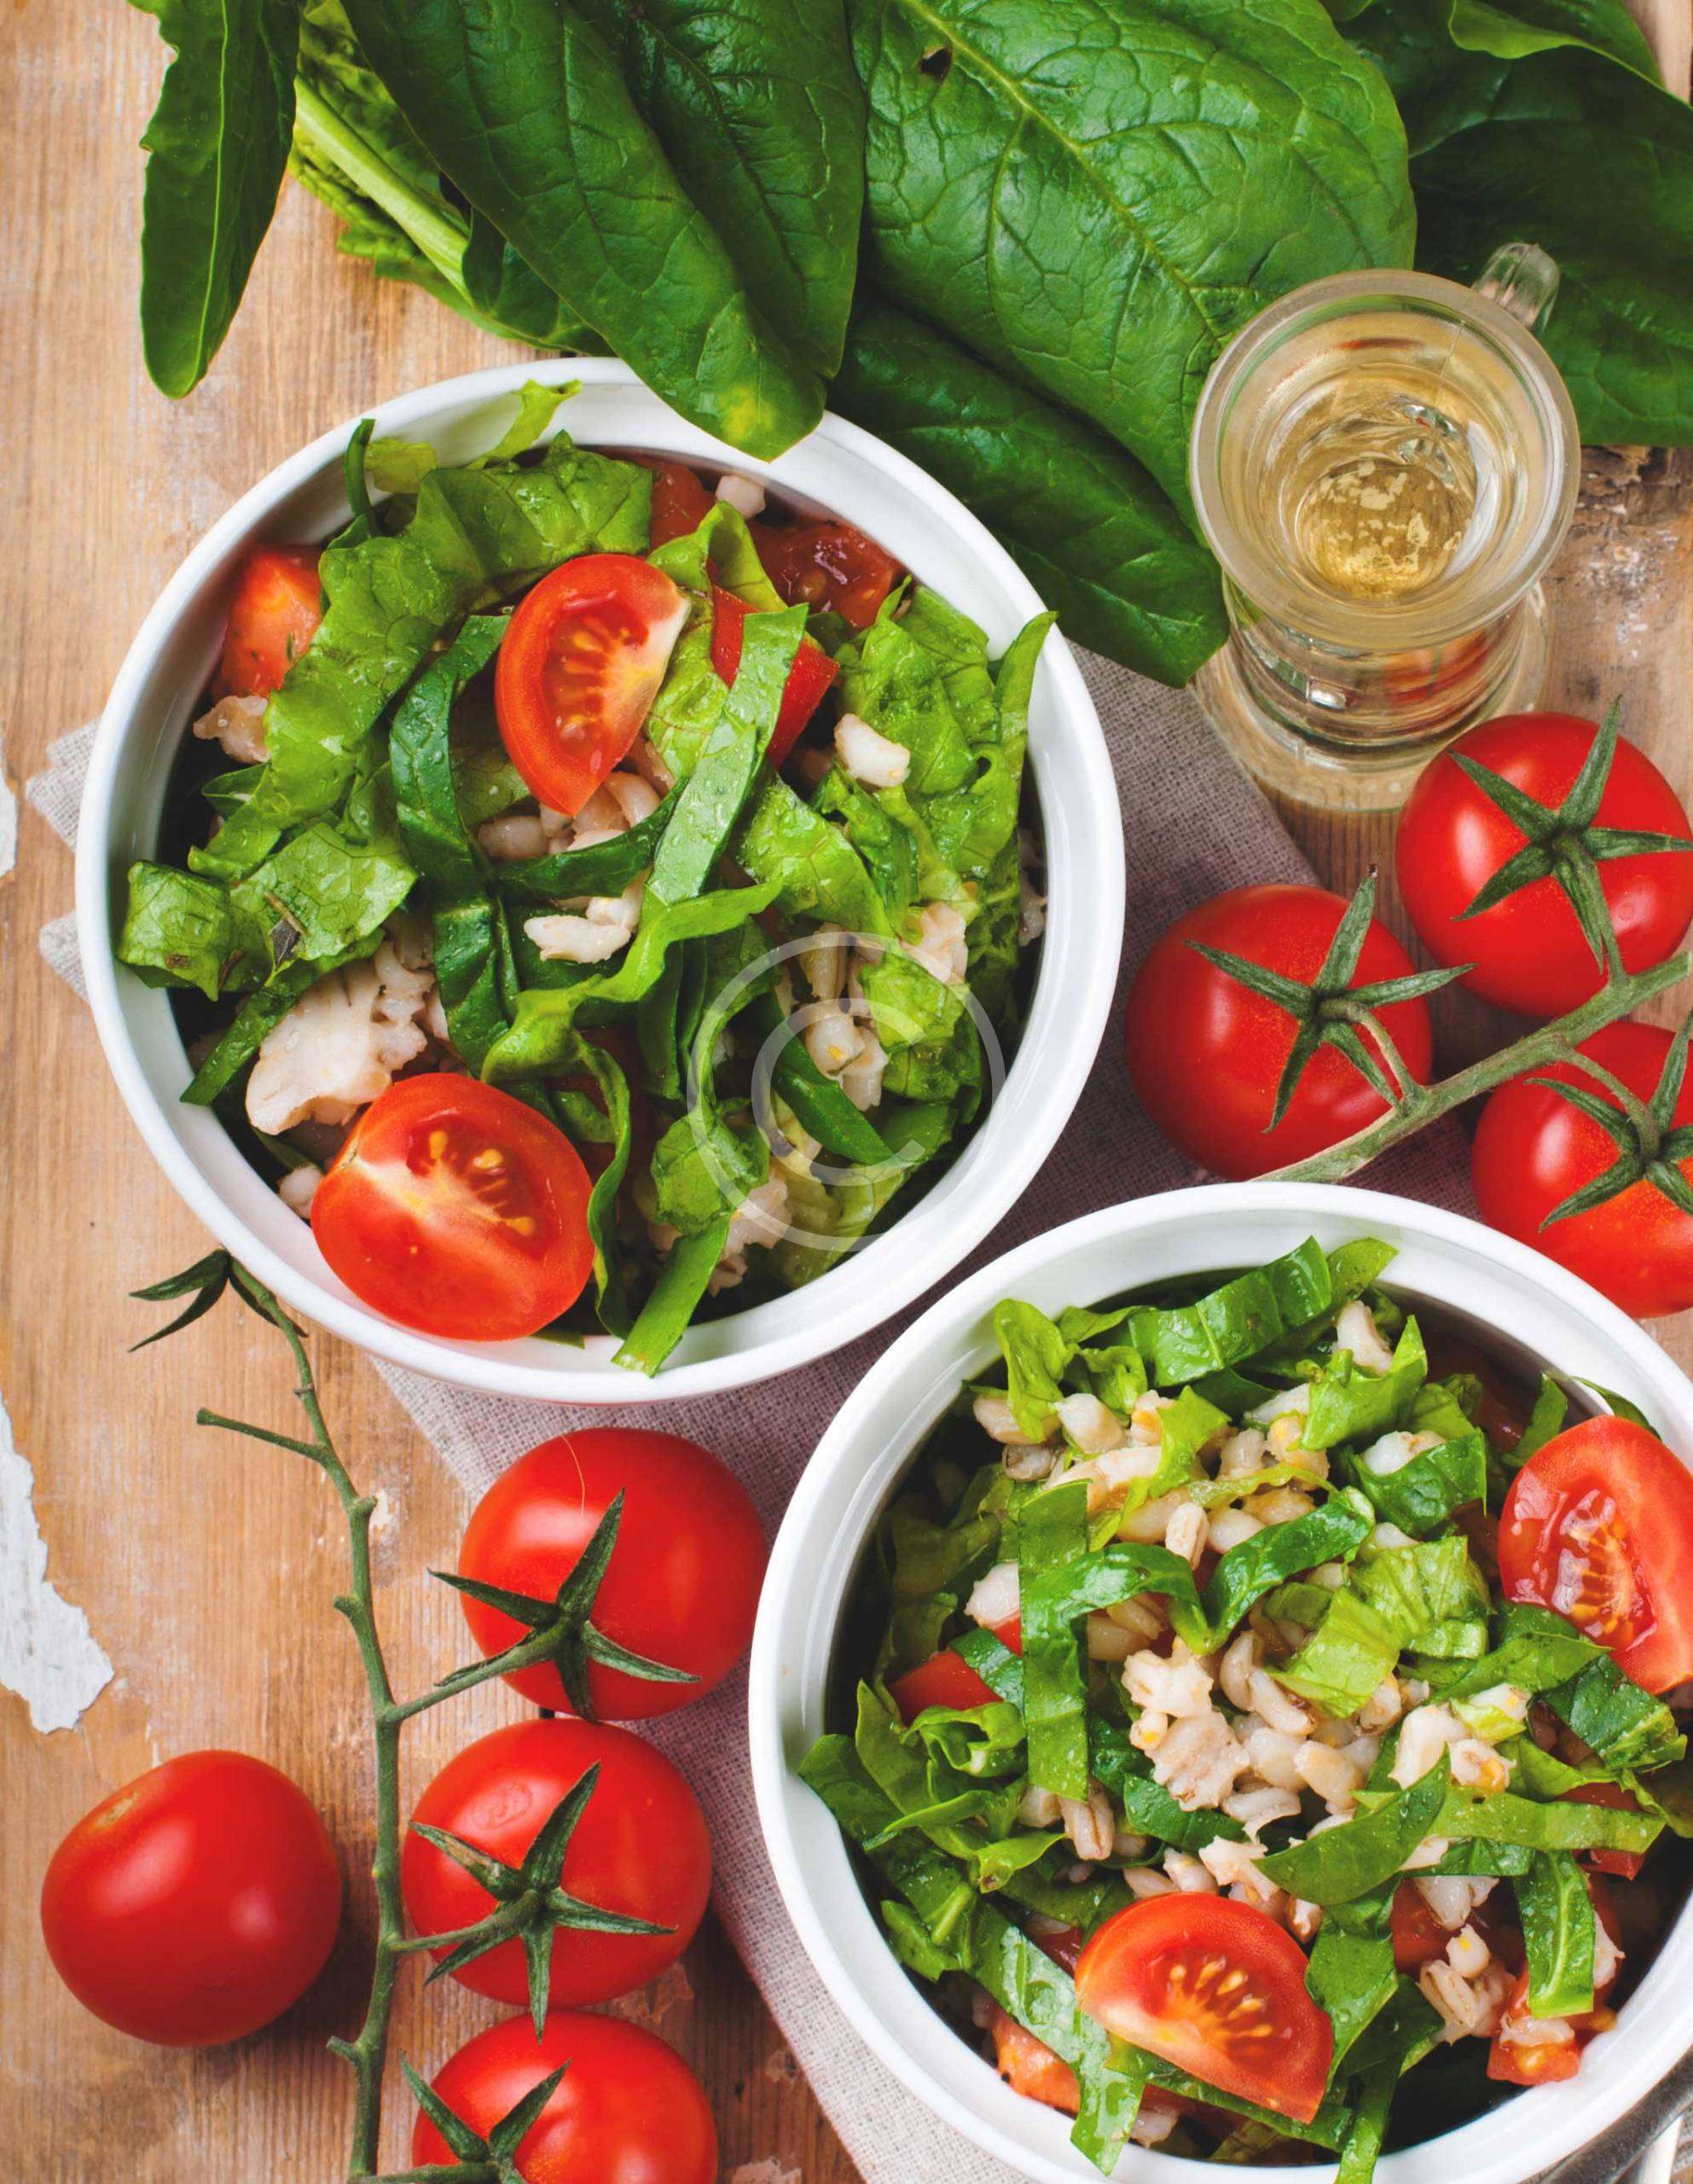 Incongruous salad mixes and recipes